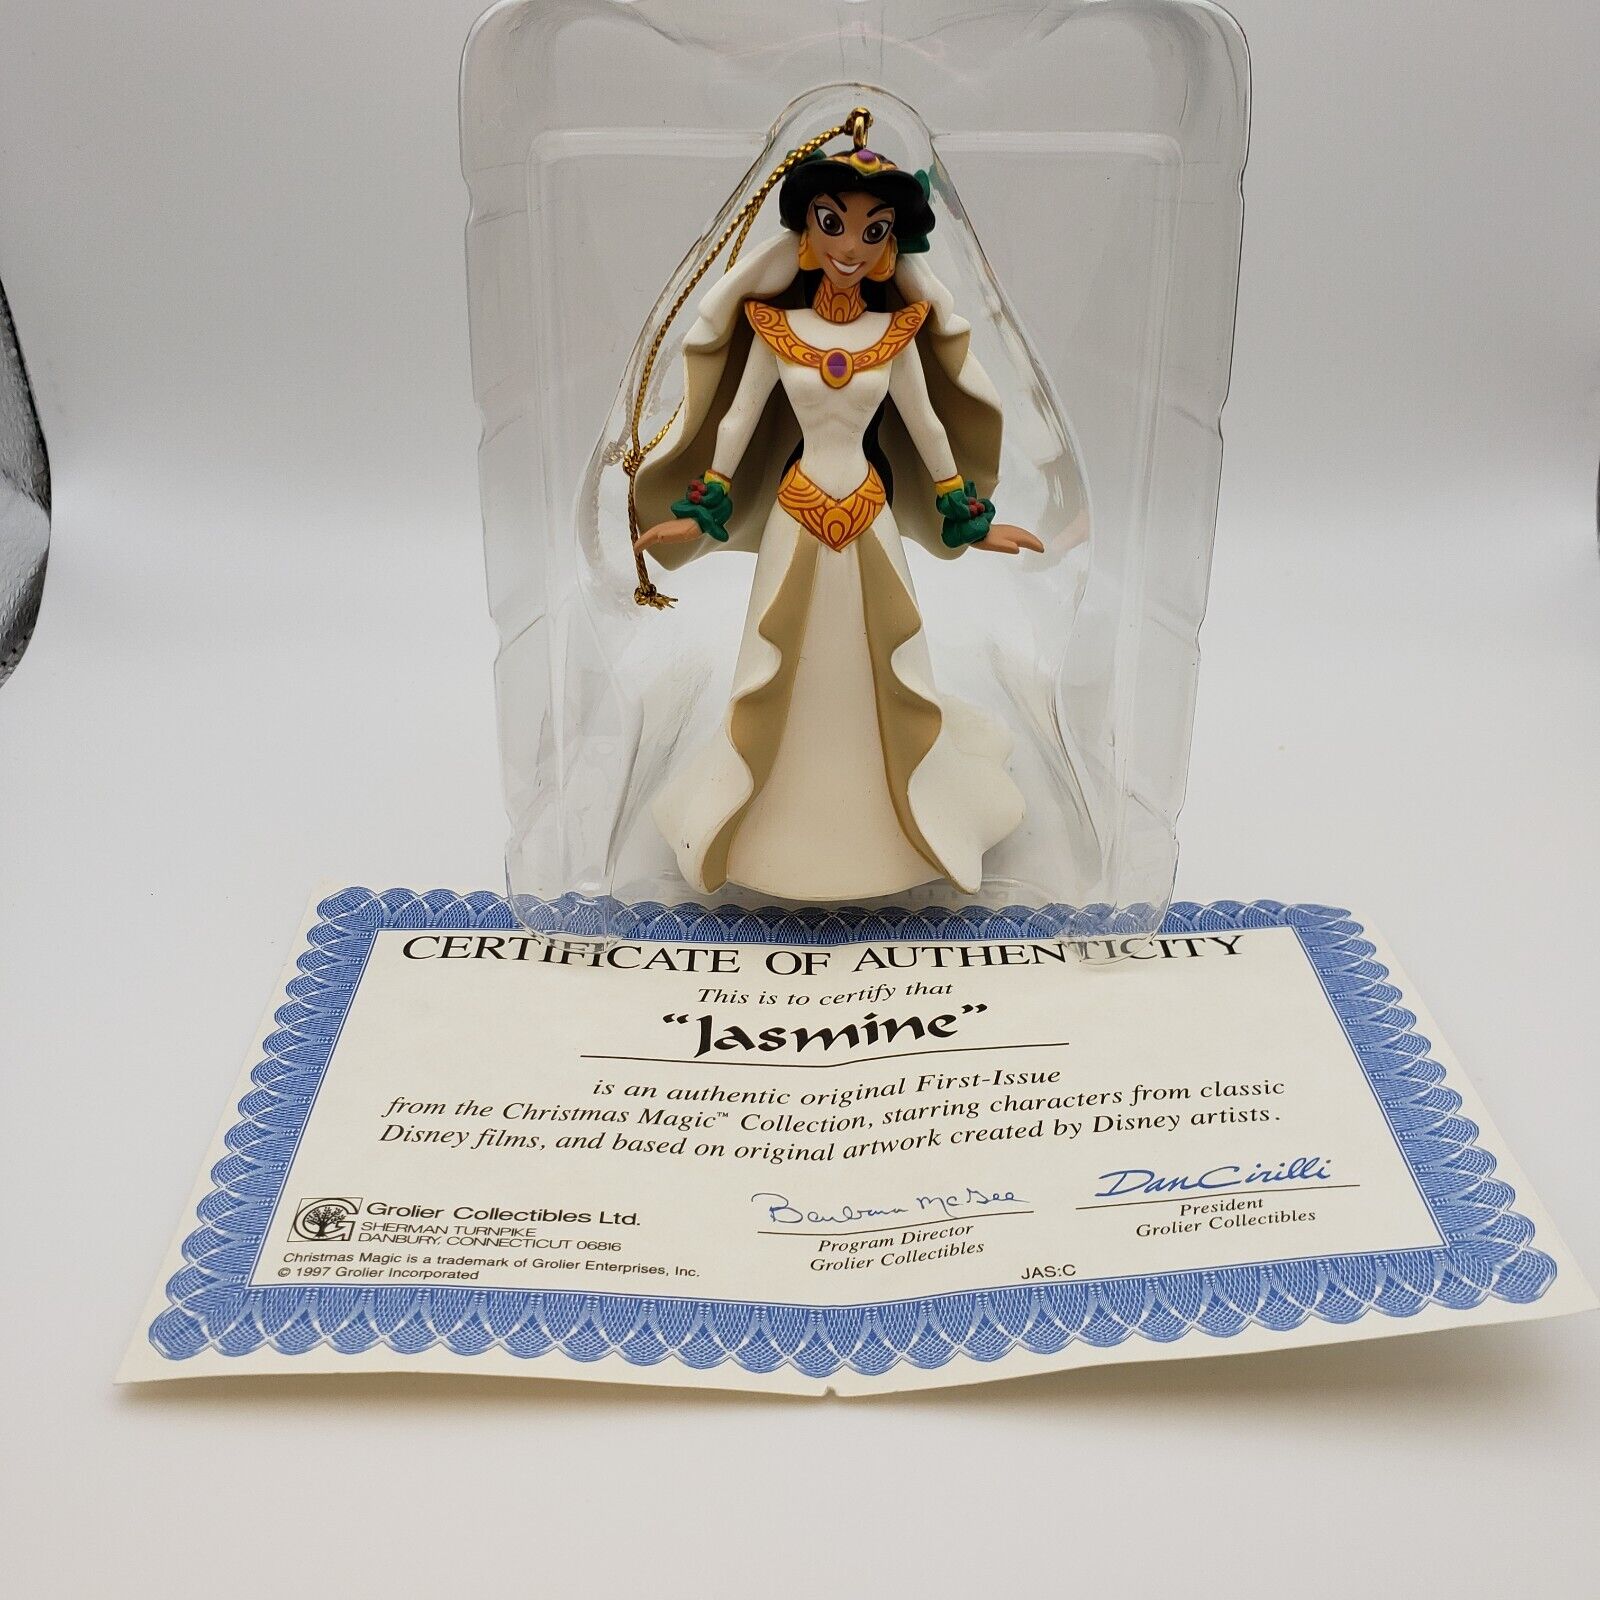 Disney's Aladdin Jasmine First Issue Grolier Collectibles Ornament